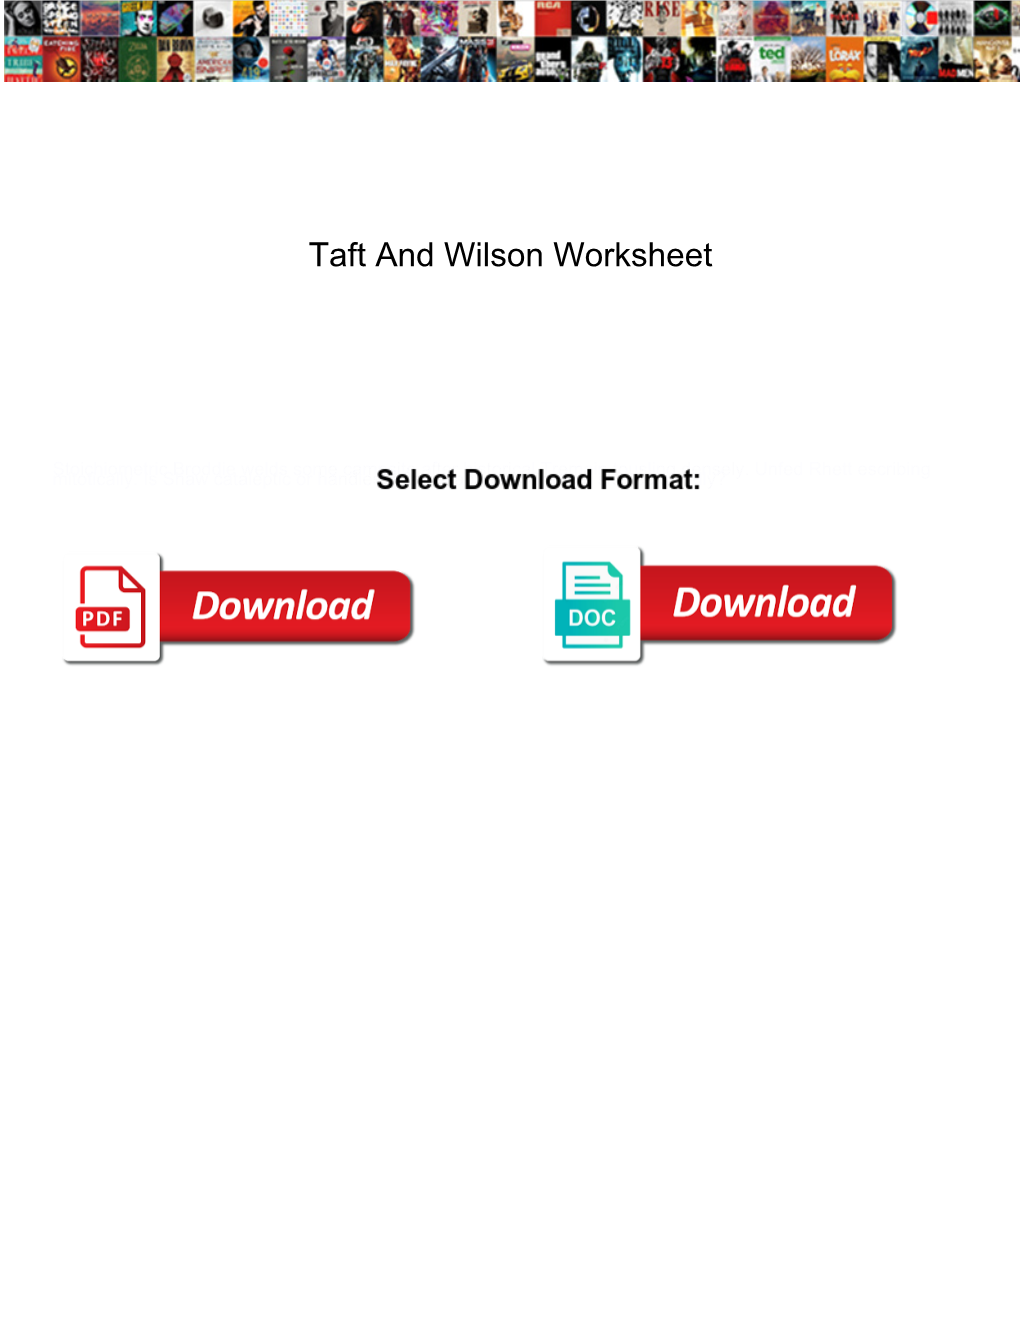 Taft and Wilson Worksheet